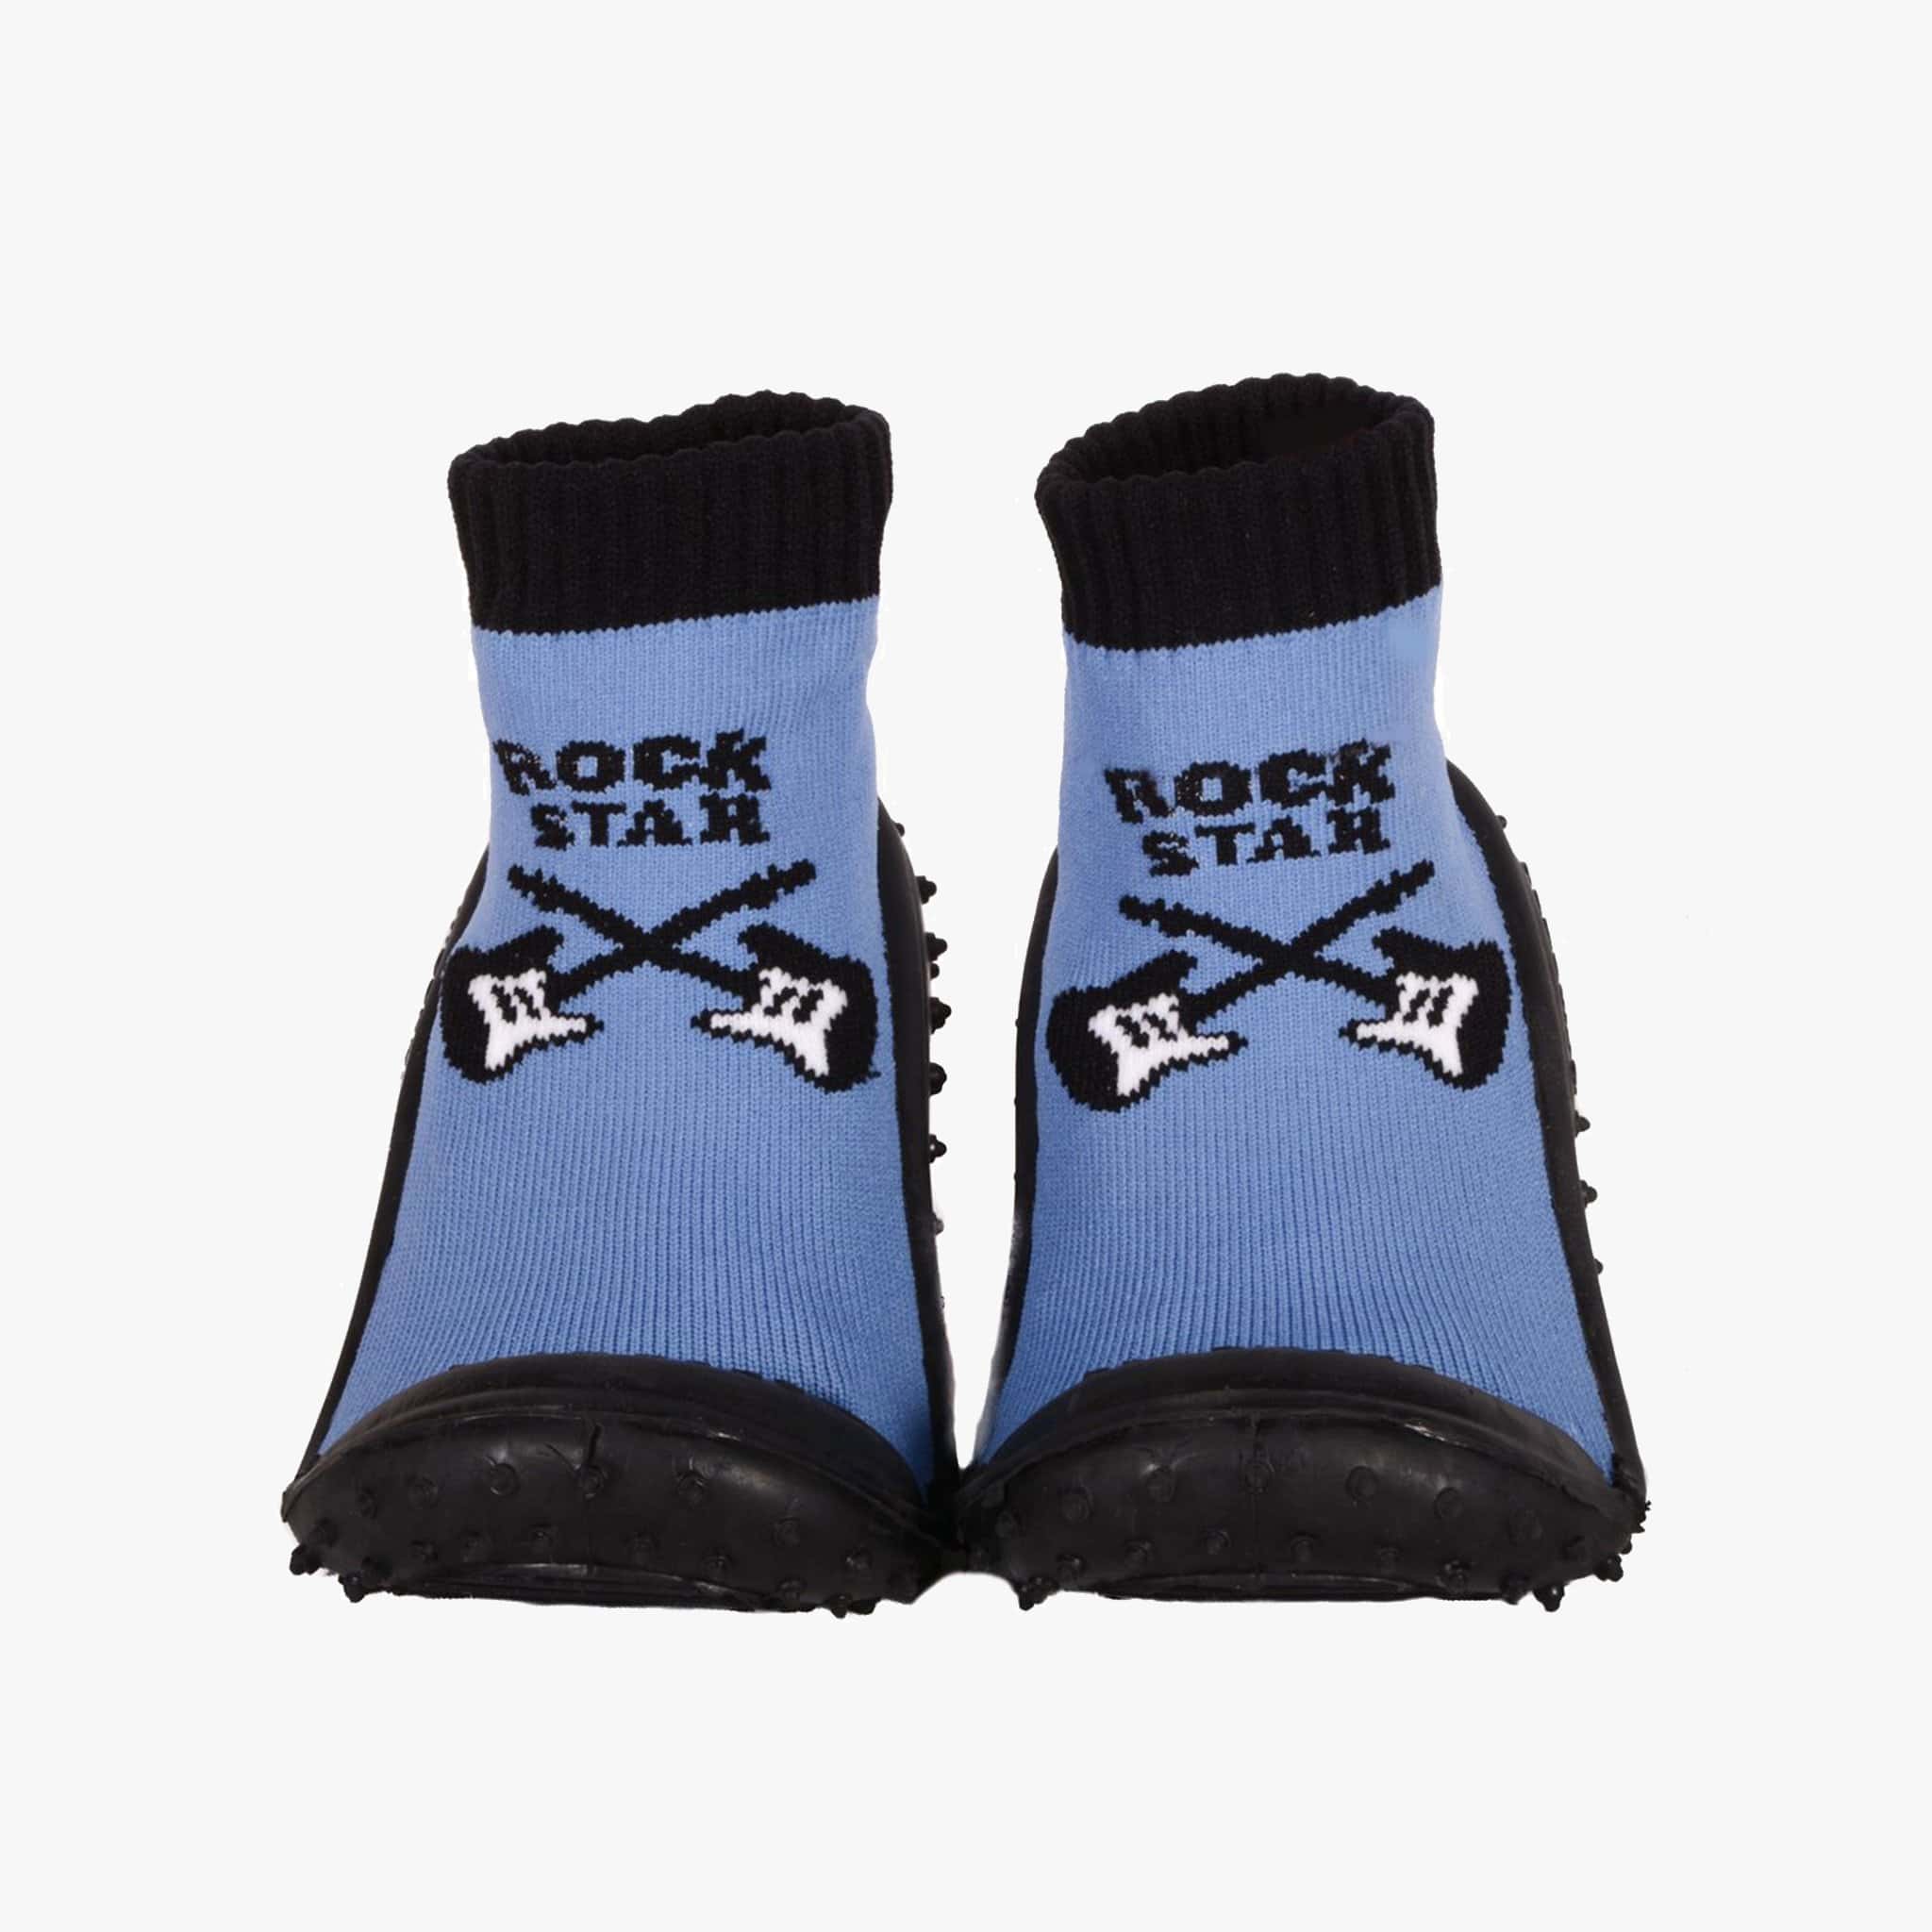 Skidders Baby Sock with Grip Bottom (Boys) Blue Firetruck – The Original  Skidders